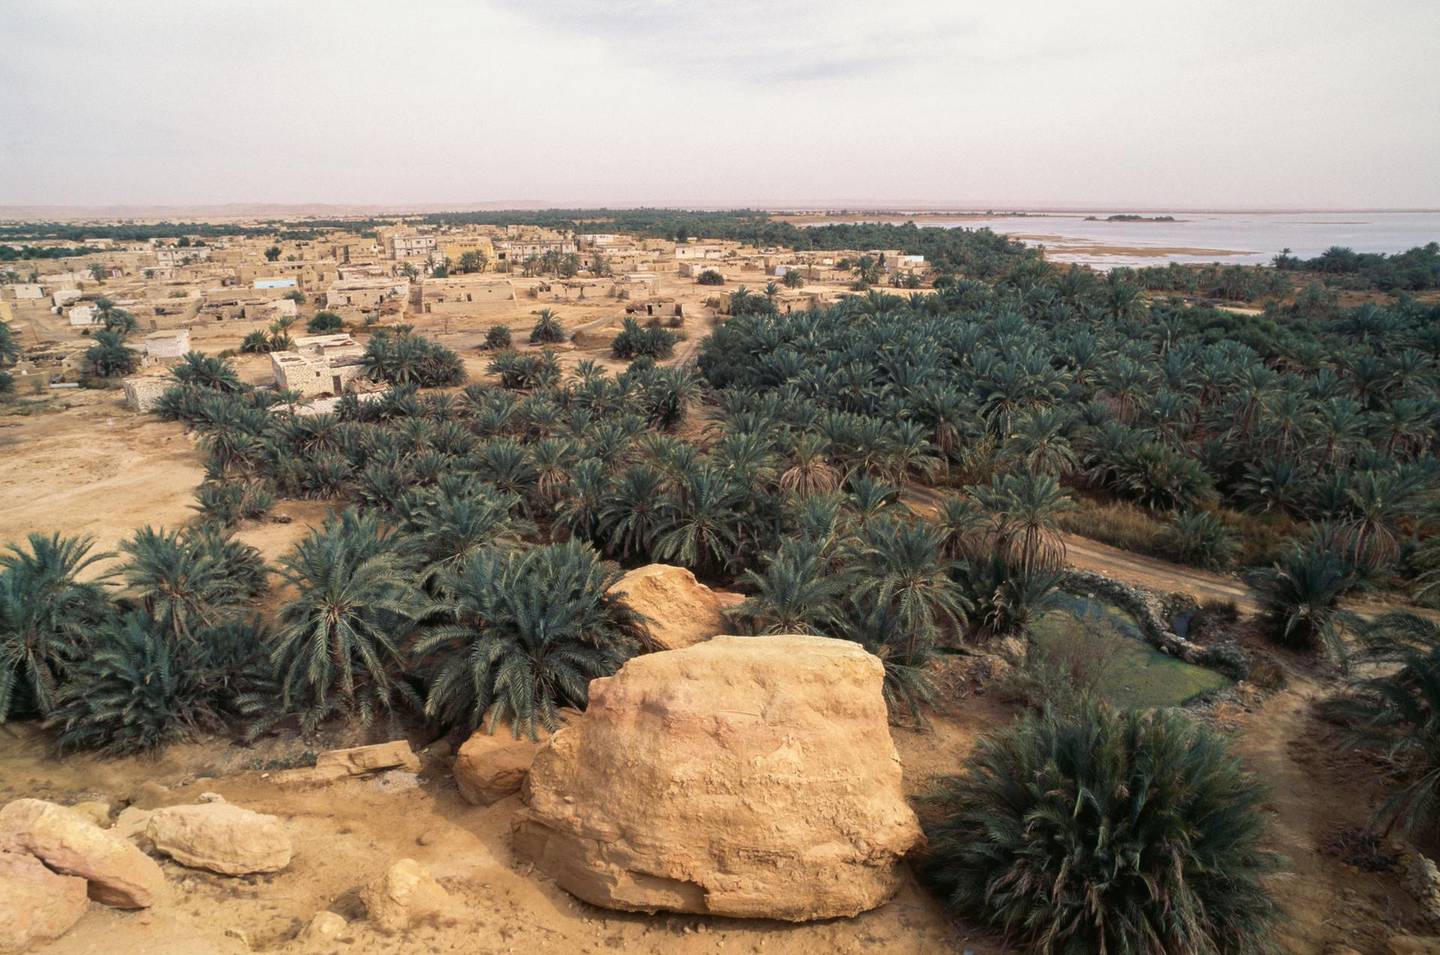 Date palms in the Siwa oasis, Sahara desert, Egypt.